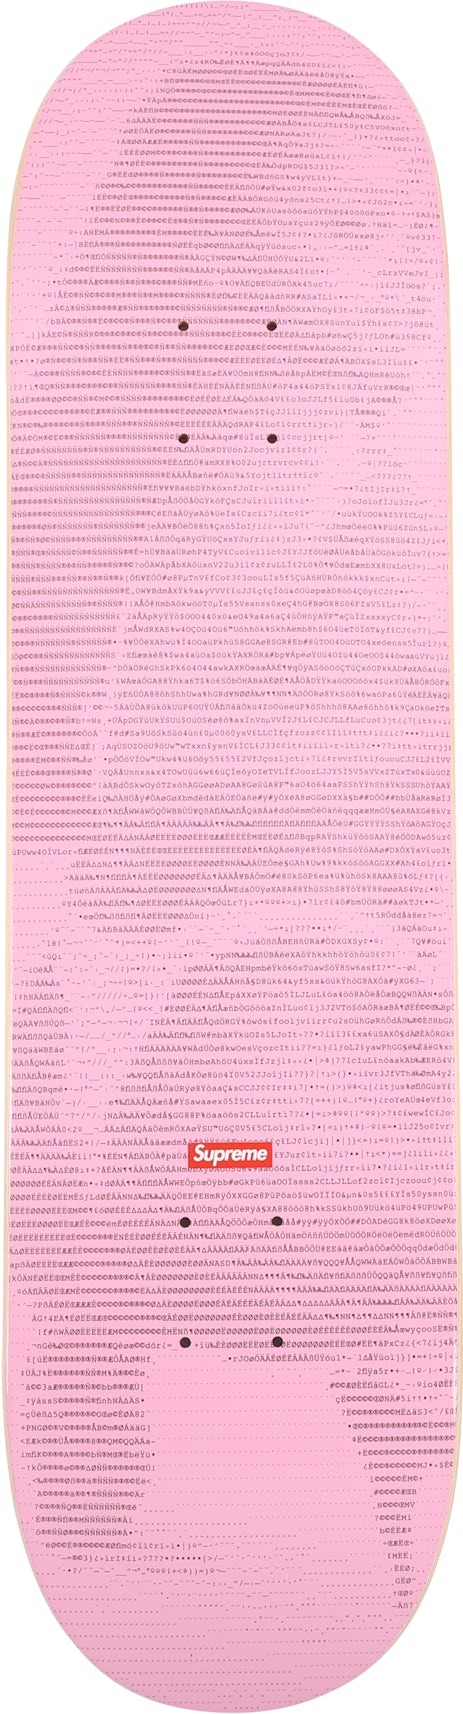 fuchsia pink chanel bag